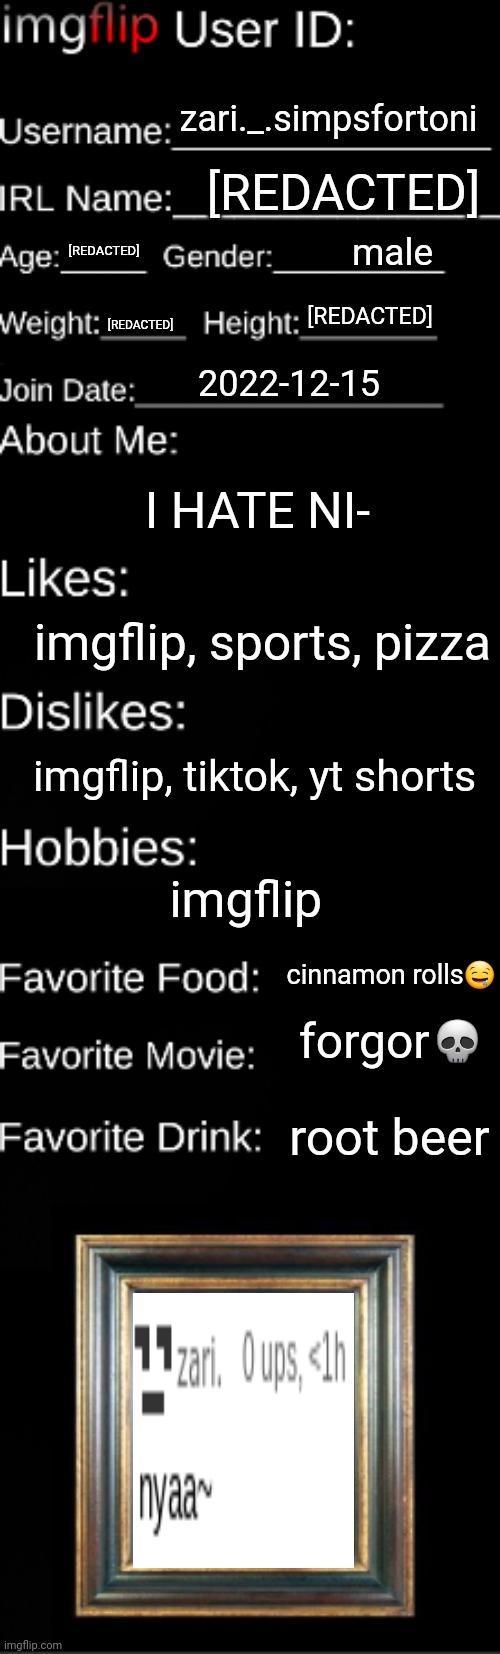 Imgflip user ID | zari._.simpsfortoni; [REDACTED]; male; [REDACTED]; [REDACTED]; [REDACTED]; 2022-12-15; I HATE NI-; imgflip, sports, pizza; imgflip, tiktok, yt shorts; imgflip; cinnamon rolls🤤; forgor💀; root beer | image tagged in imgflip user id | made w/ Imgflip meme maker